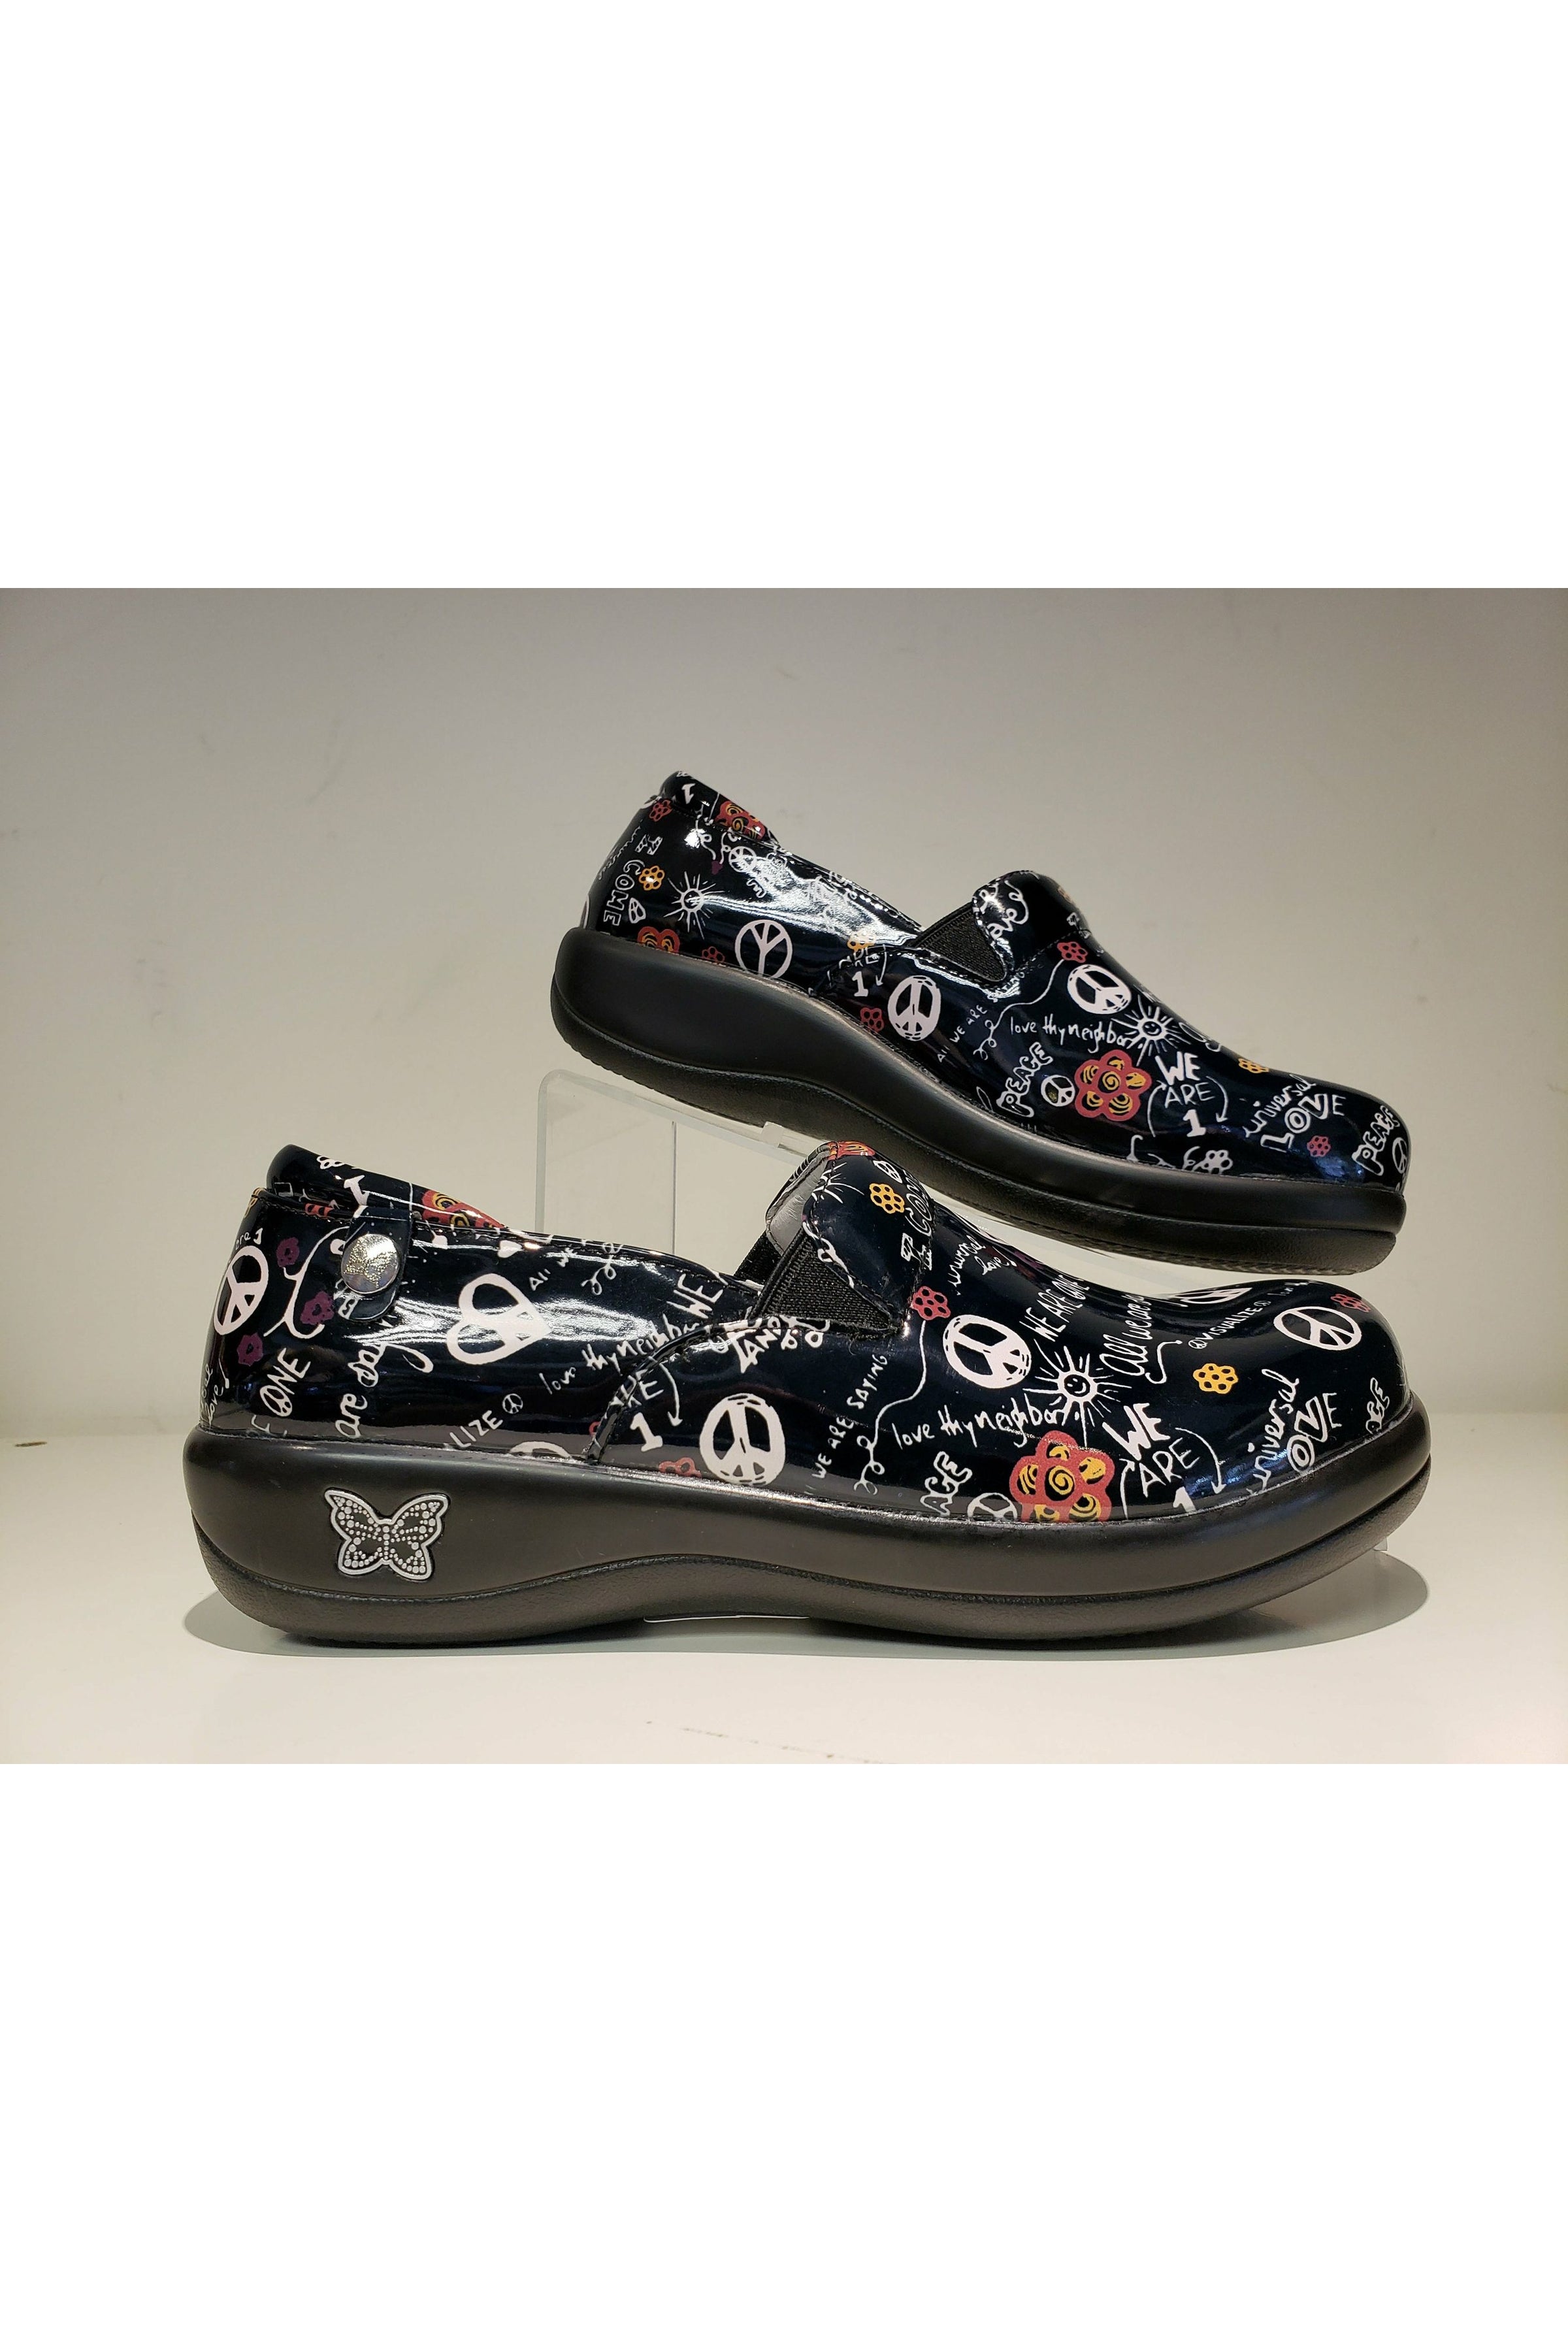 Alegria Keli Peace & Love Shoe, Style Kel-7570, pair